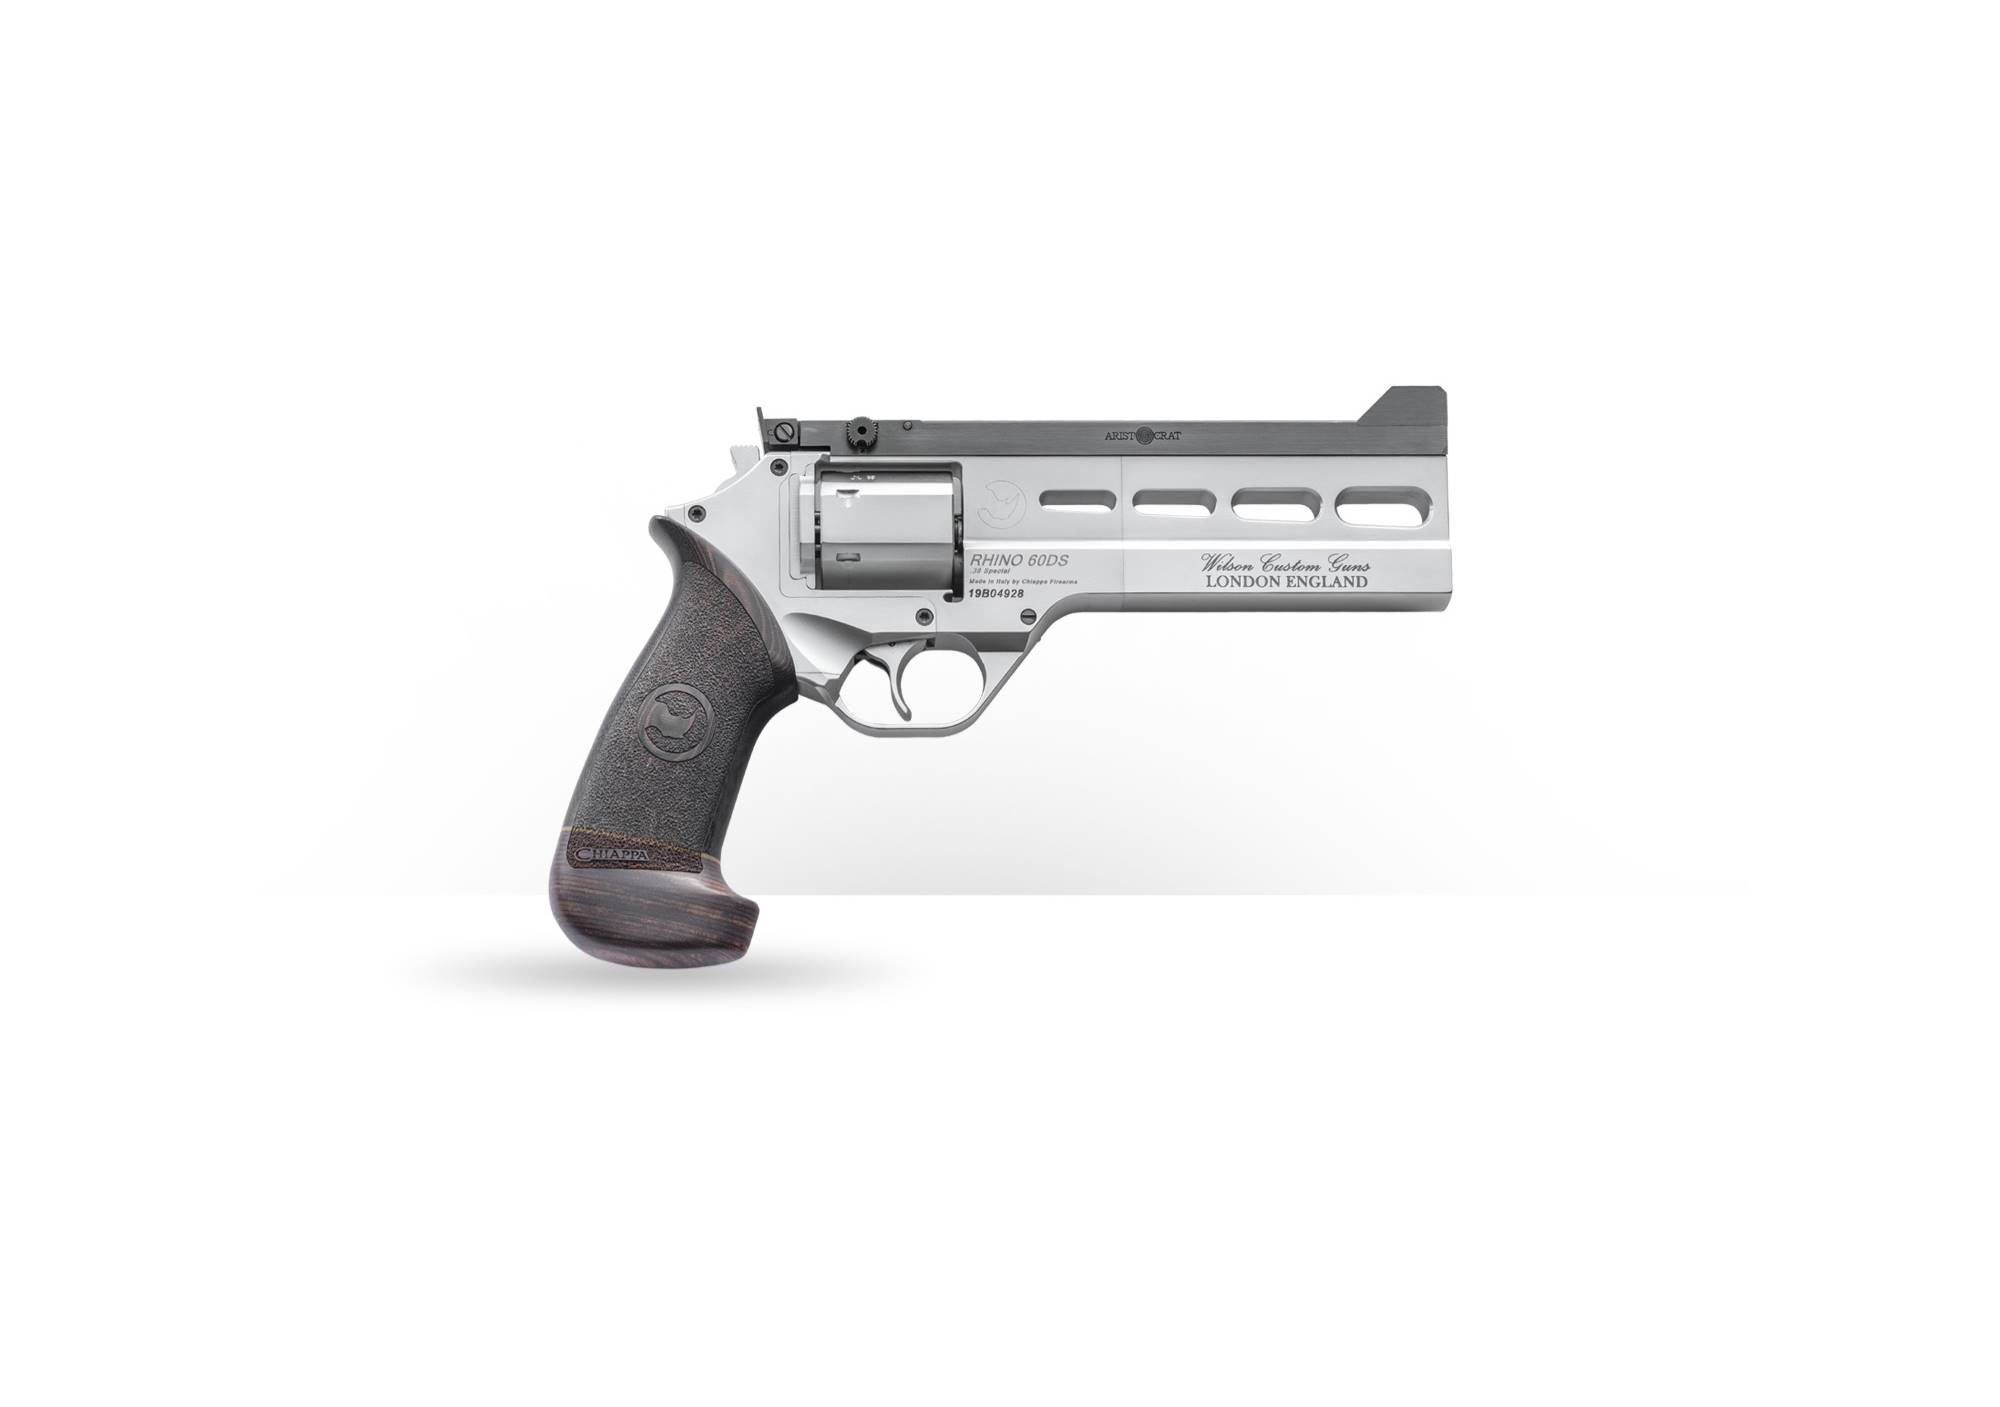 Chiappa Firearms Armas Sim - Microsoft Apps